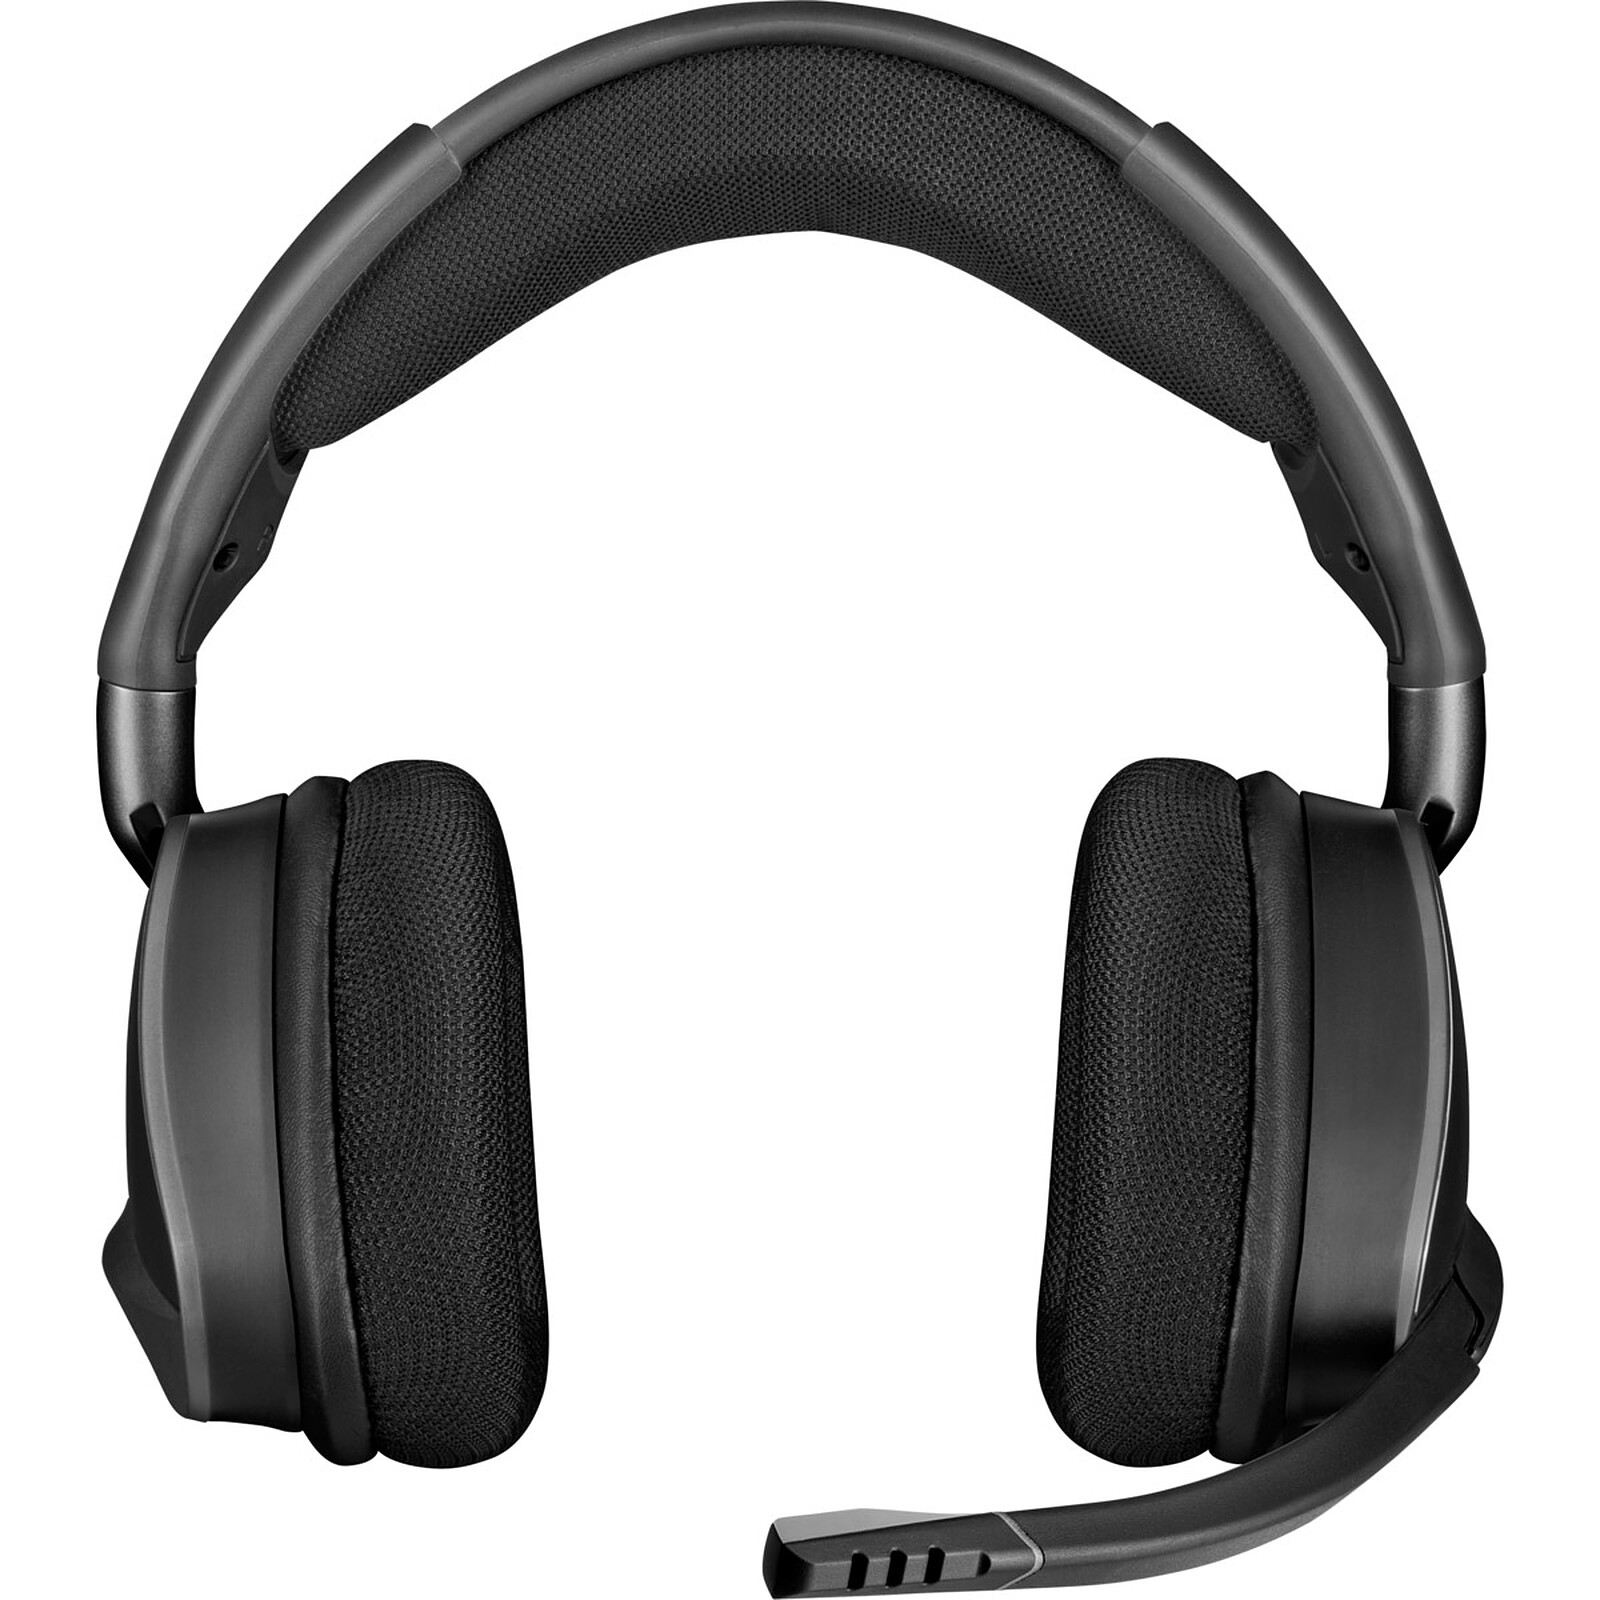 Support casque gamer Corsair ST100 RGB pas cher - Ecouteurs